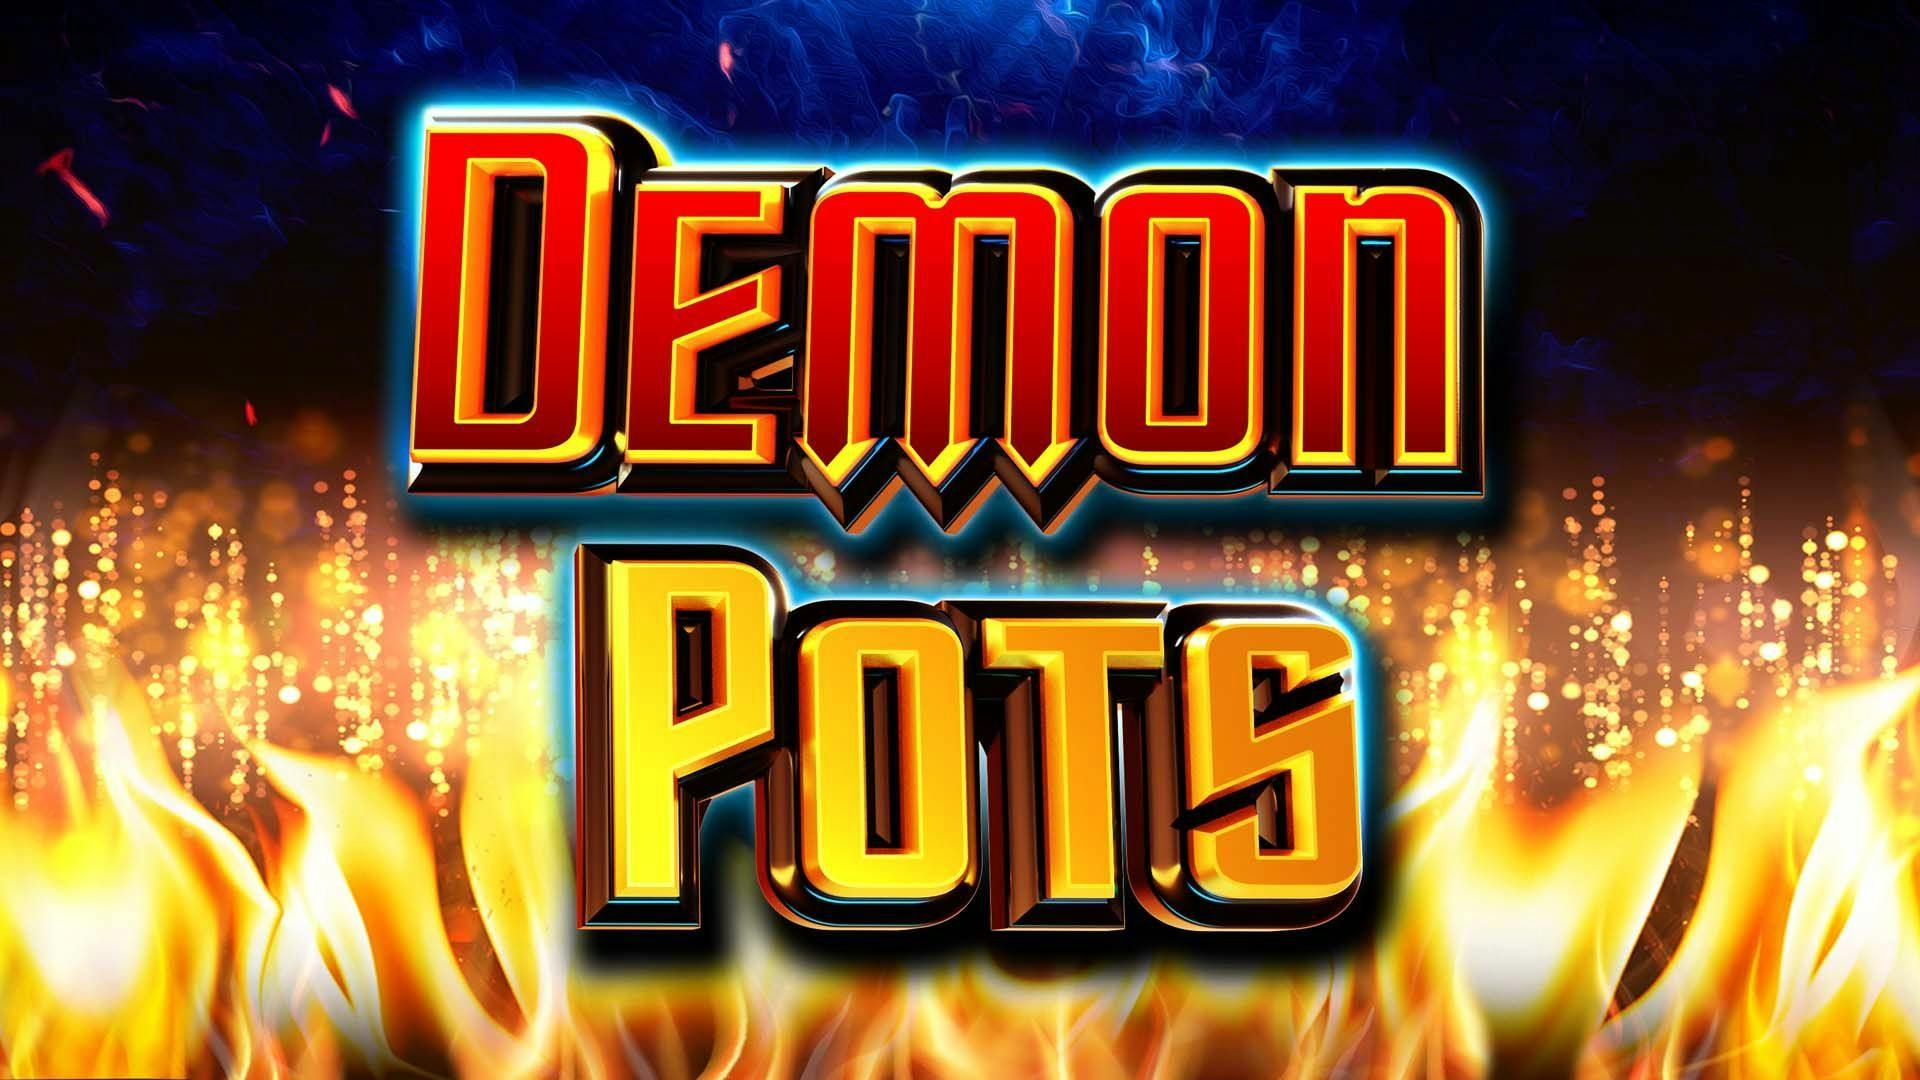 Demon Pots Slot Machine Online Free Game Play